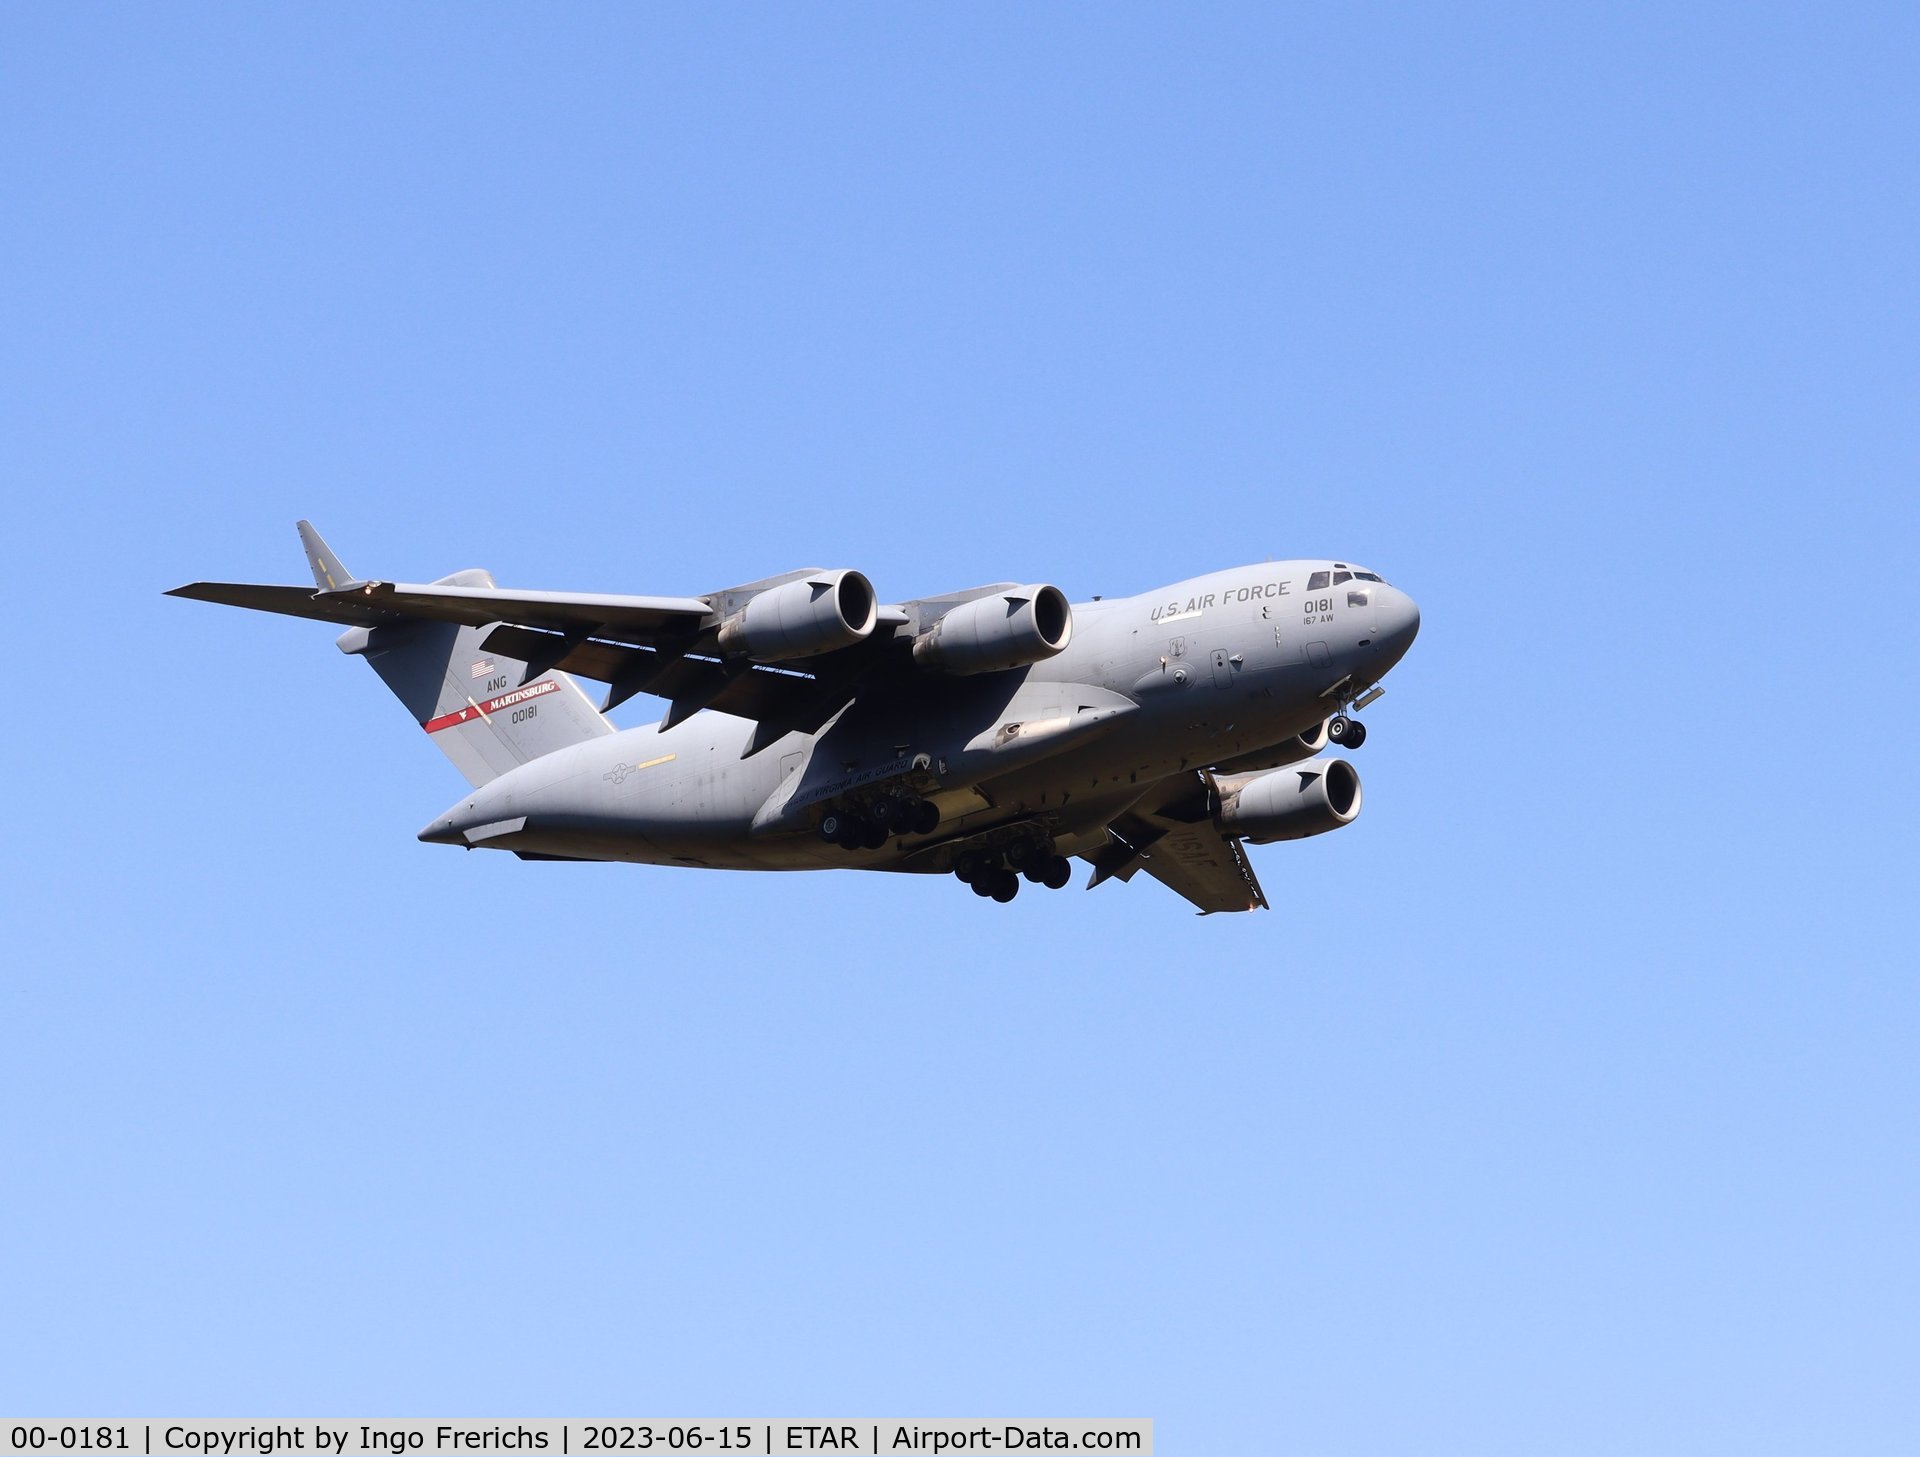 00-0181, 2000 Boeing C-17A Globemaster III C/N 50089/F088/P81, 00-0181 Boeing C-17A approaching Ramstein Air Base.